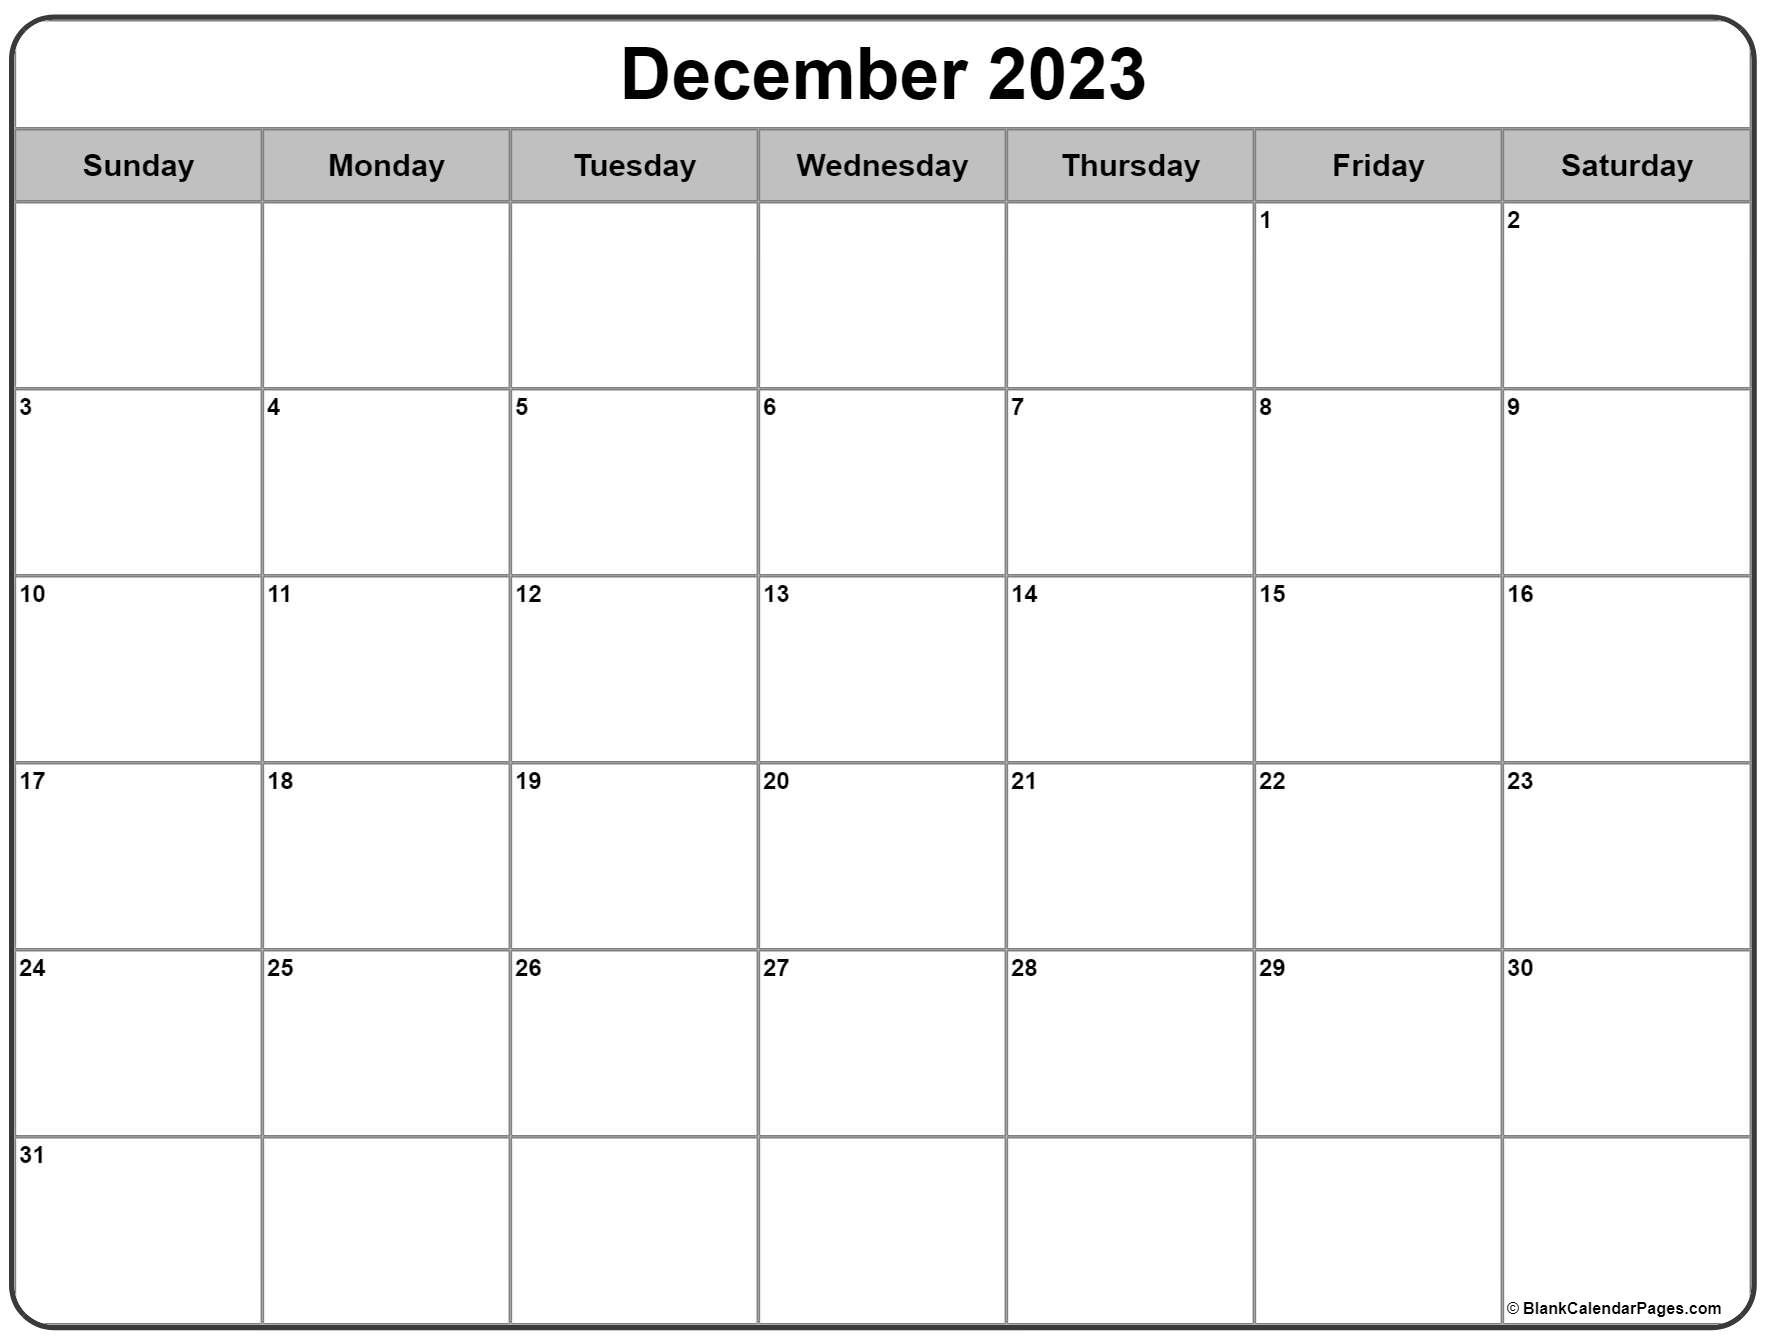 nsu-winter-2023-calendar-customize-and-print